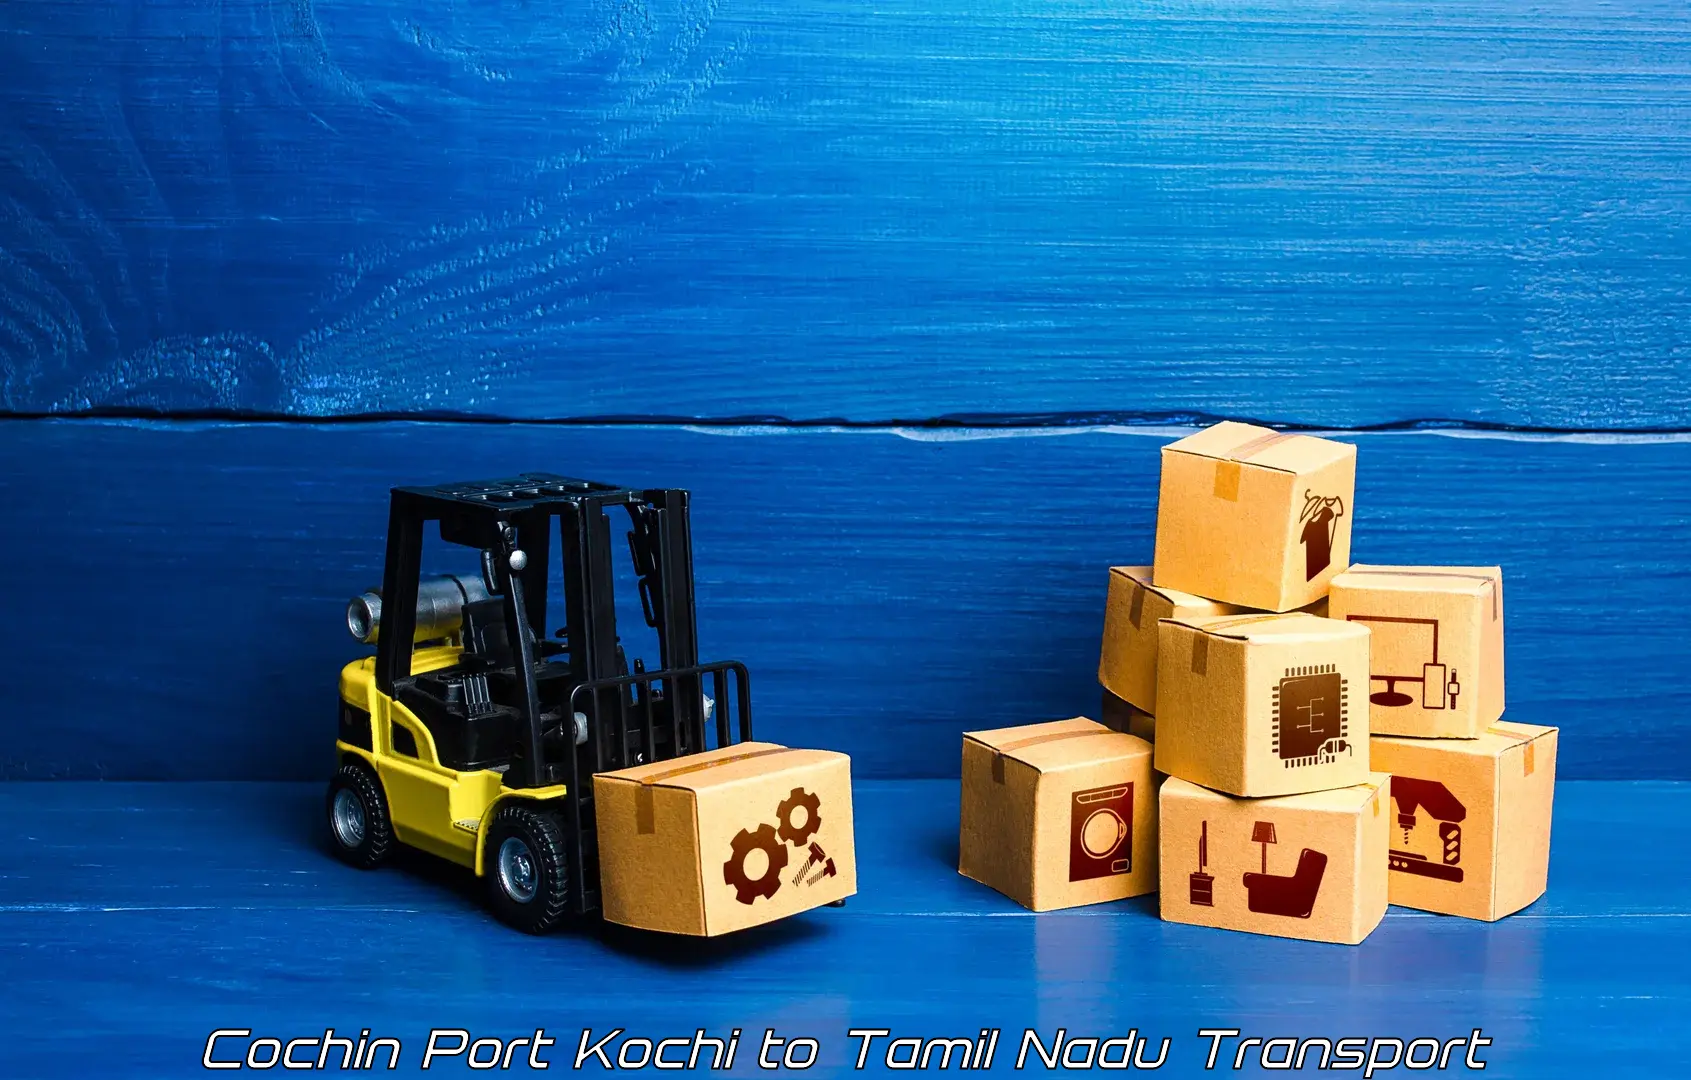 Lorry transport service Cochin Port Kochi to Chennai